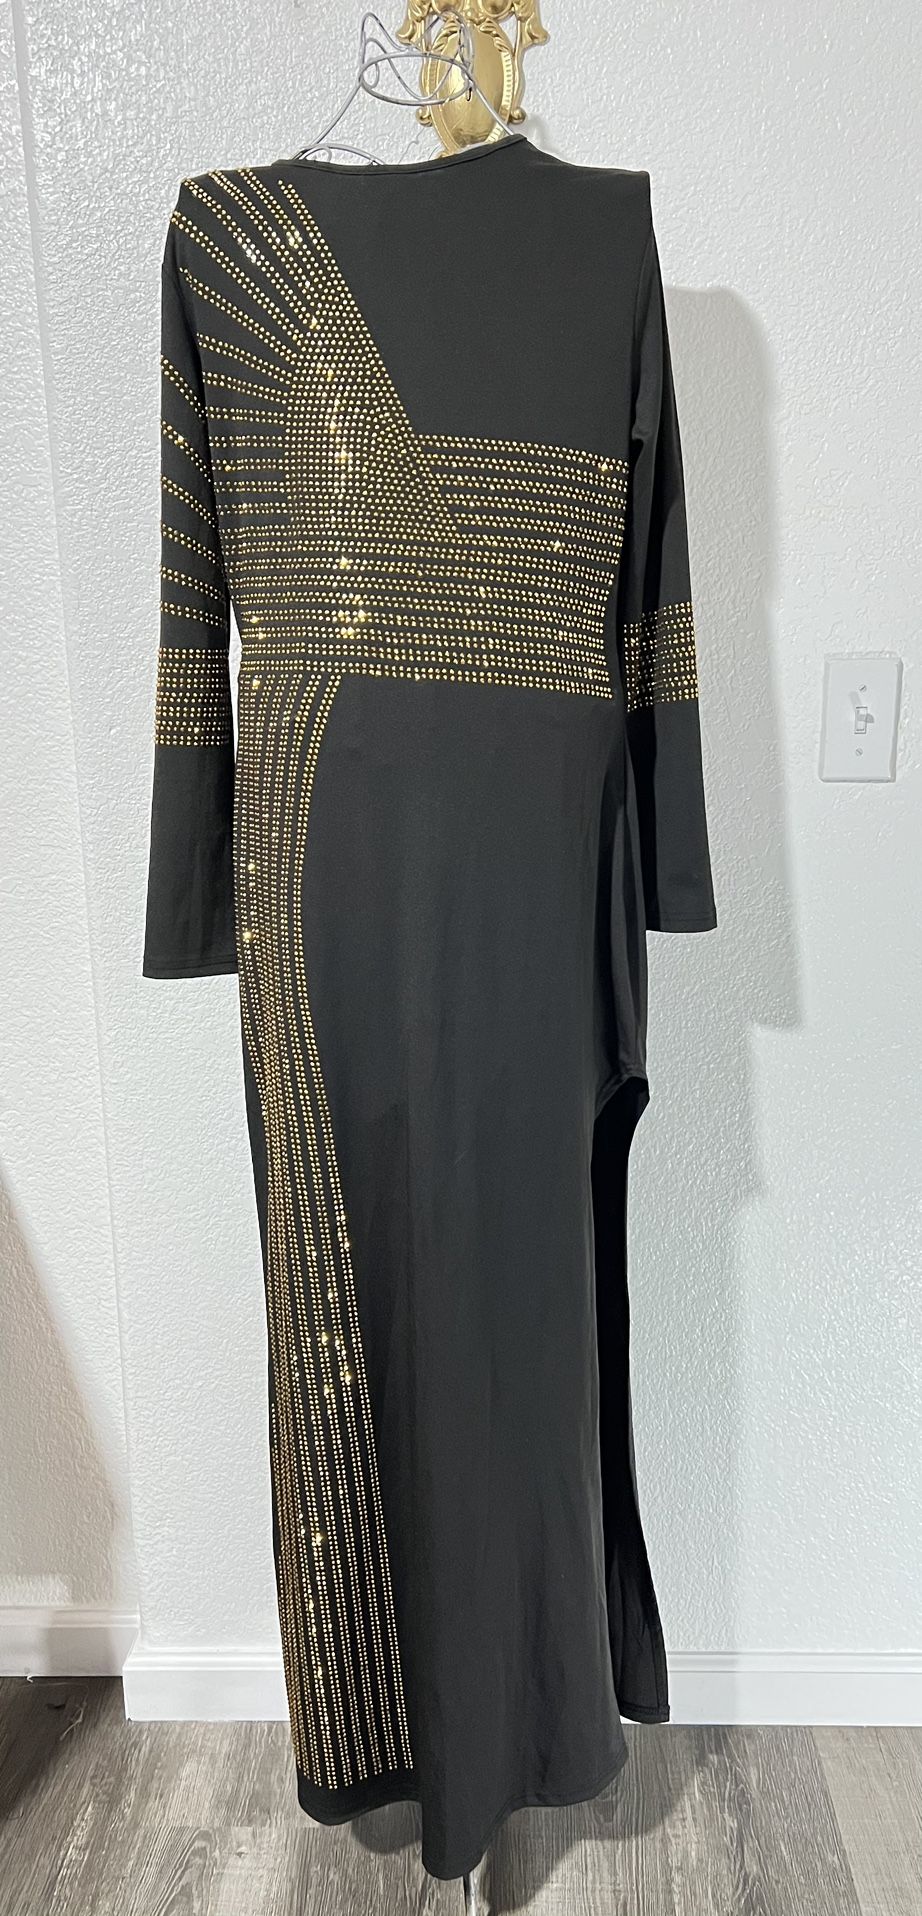 Dress  Stunning Gold Black Rhinestone long dress Size M/L